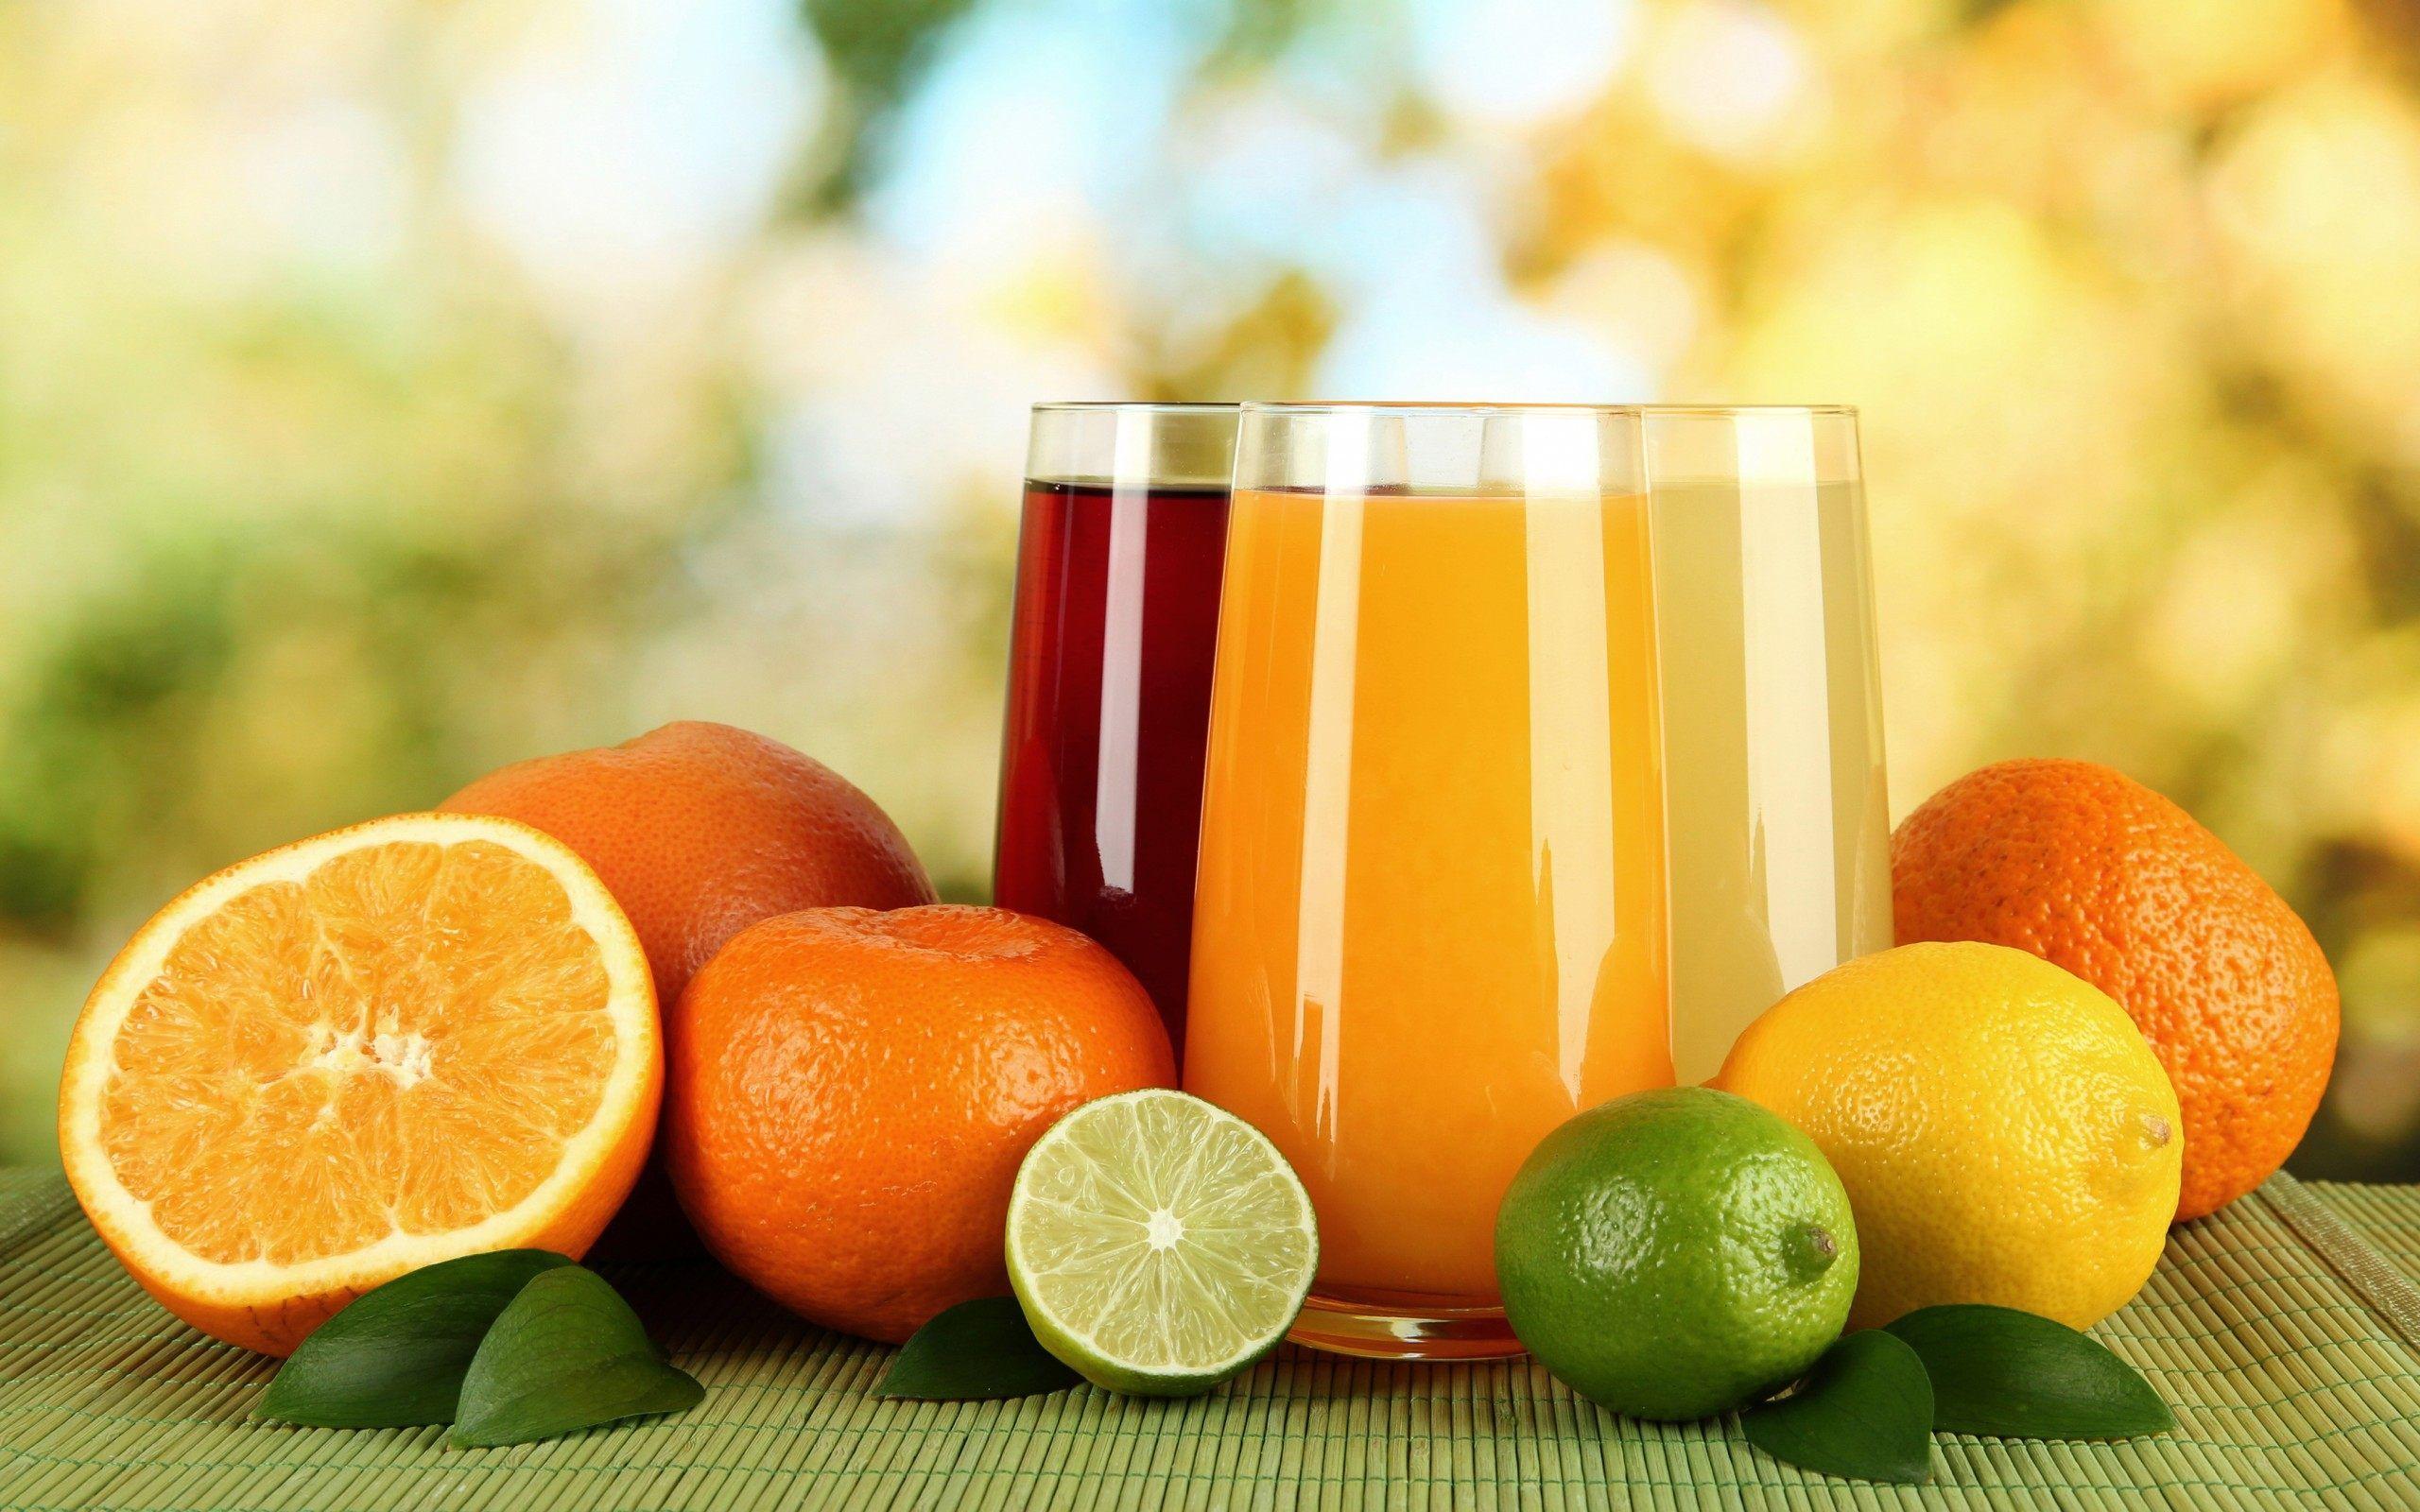 Fruit Juices HD Wallpaper Free Download For Desktop. Juicing